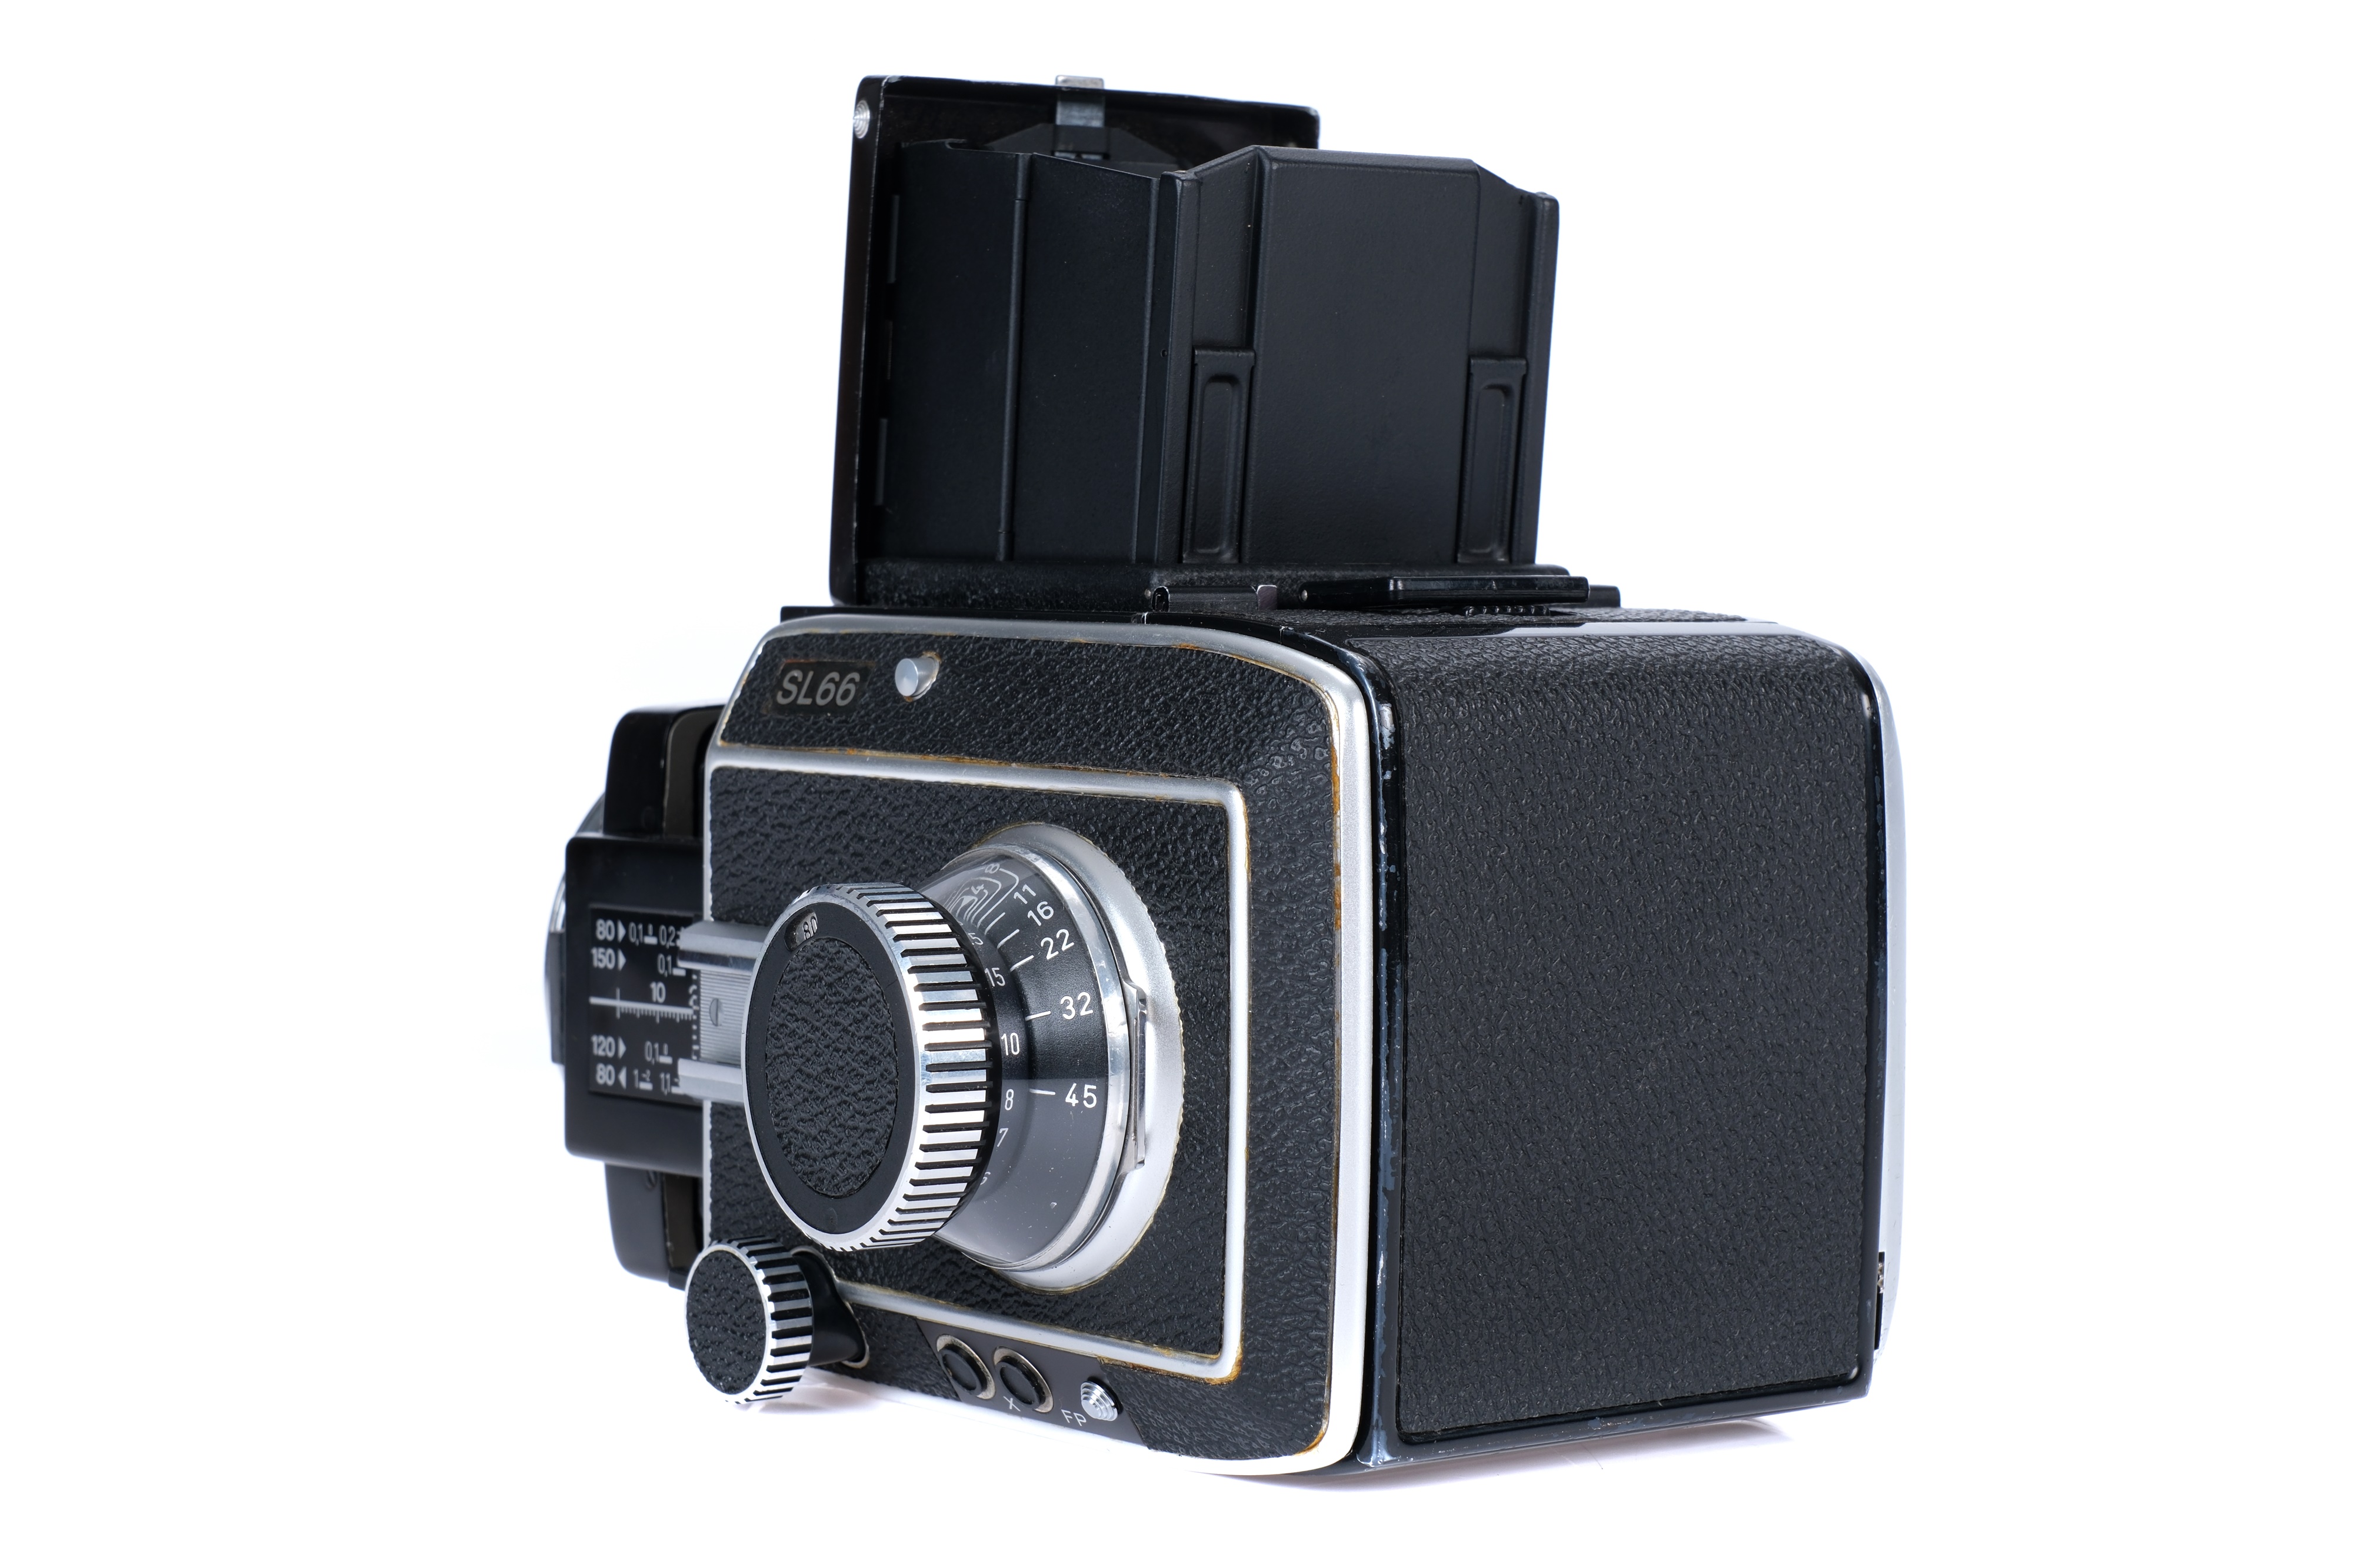 A Rollei Rolleiflex SL66 Medium Format Camera, - Image 2 of 3